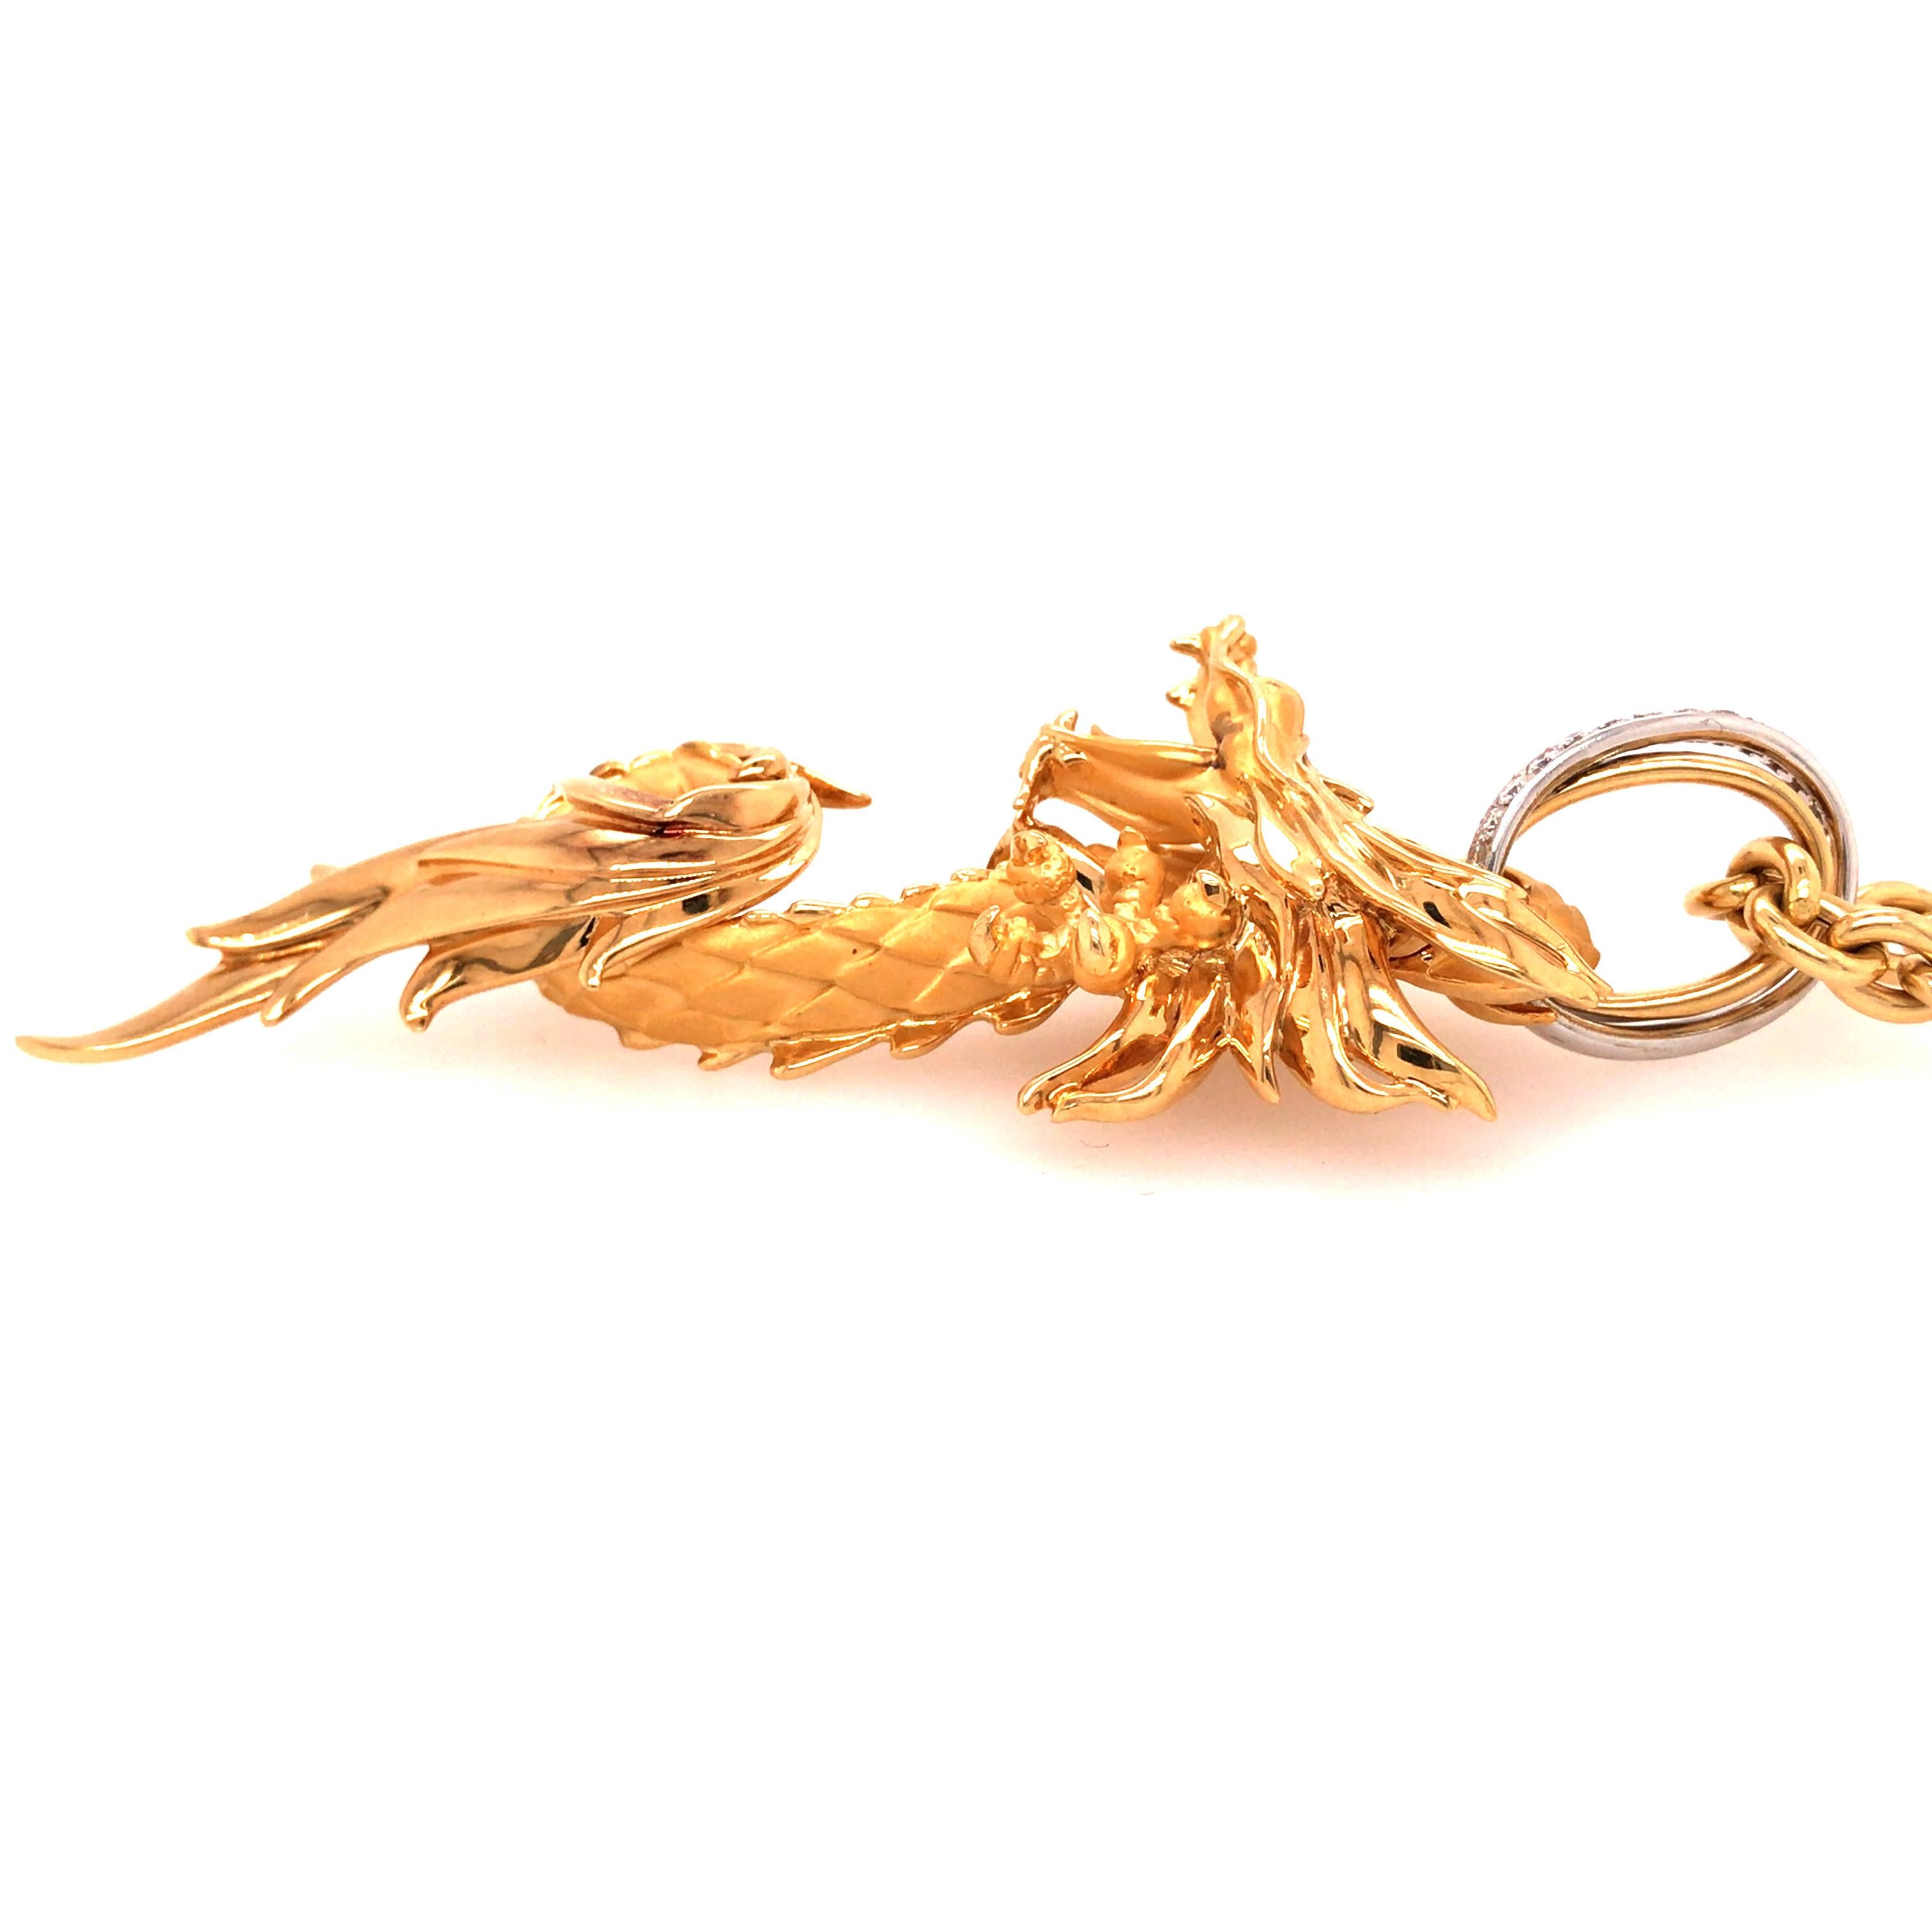 gold pendant dragon